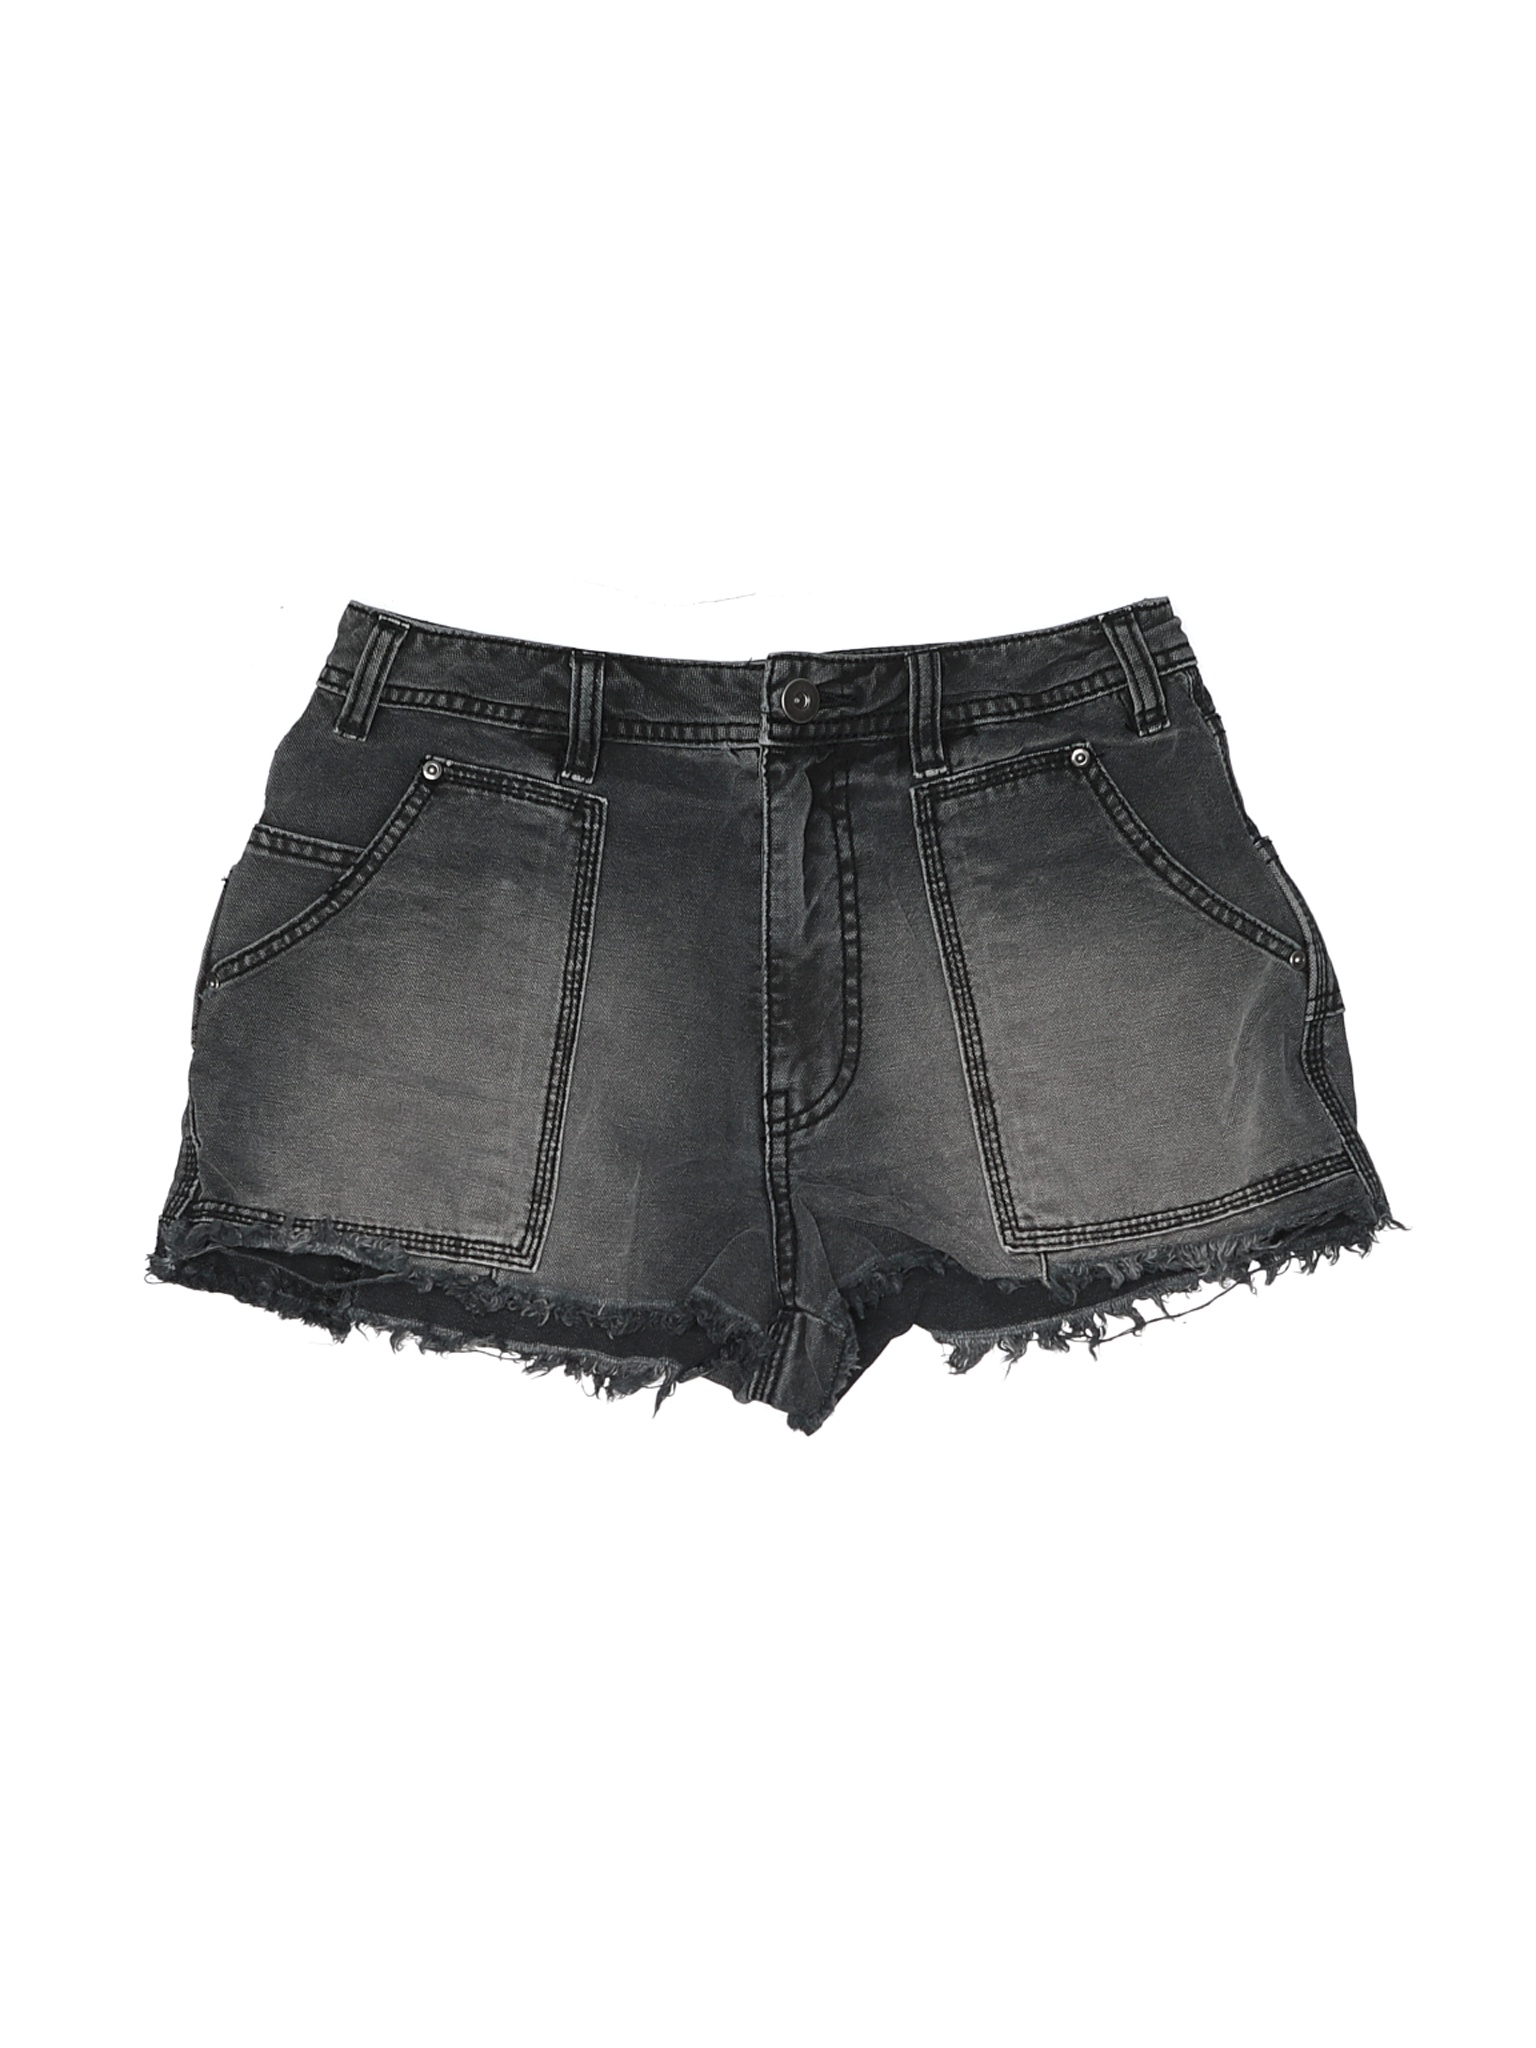 Free People Women Gray Denim Shorts 4 | eBay